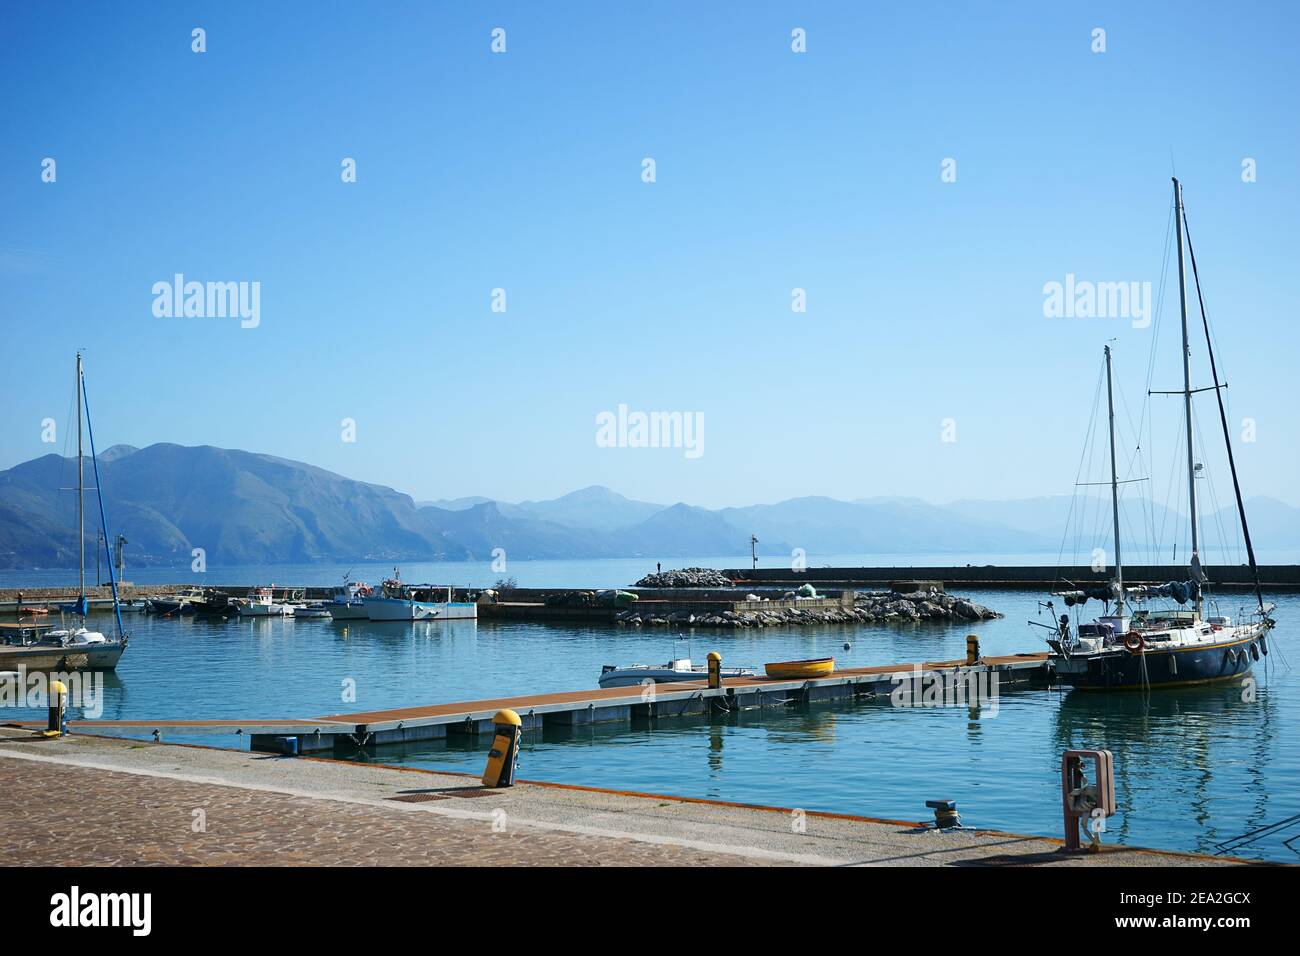 The picturesque city of Policastro harboor, coast of the Mediterranean Sea in Cilento, Campania, Italy Stock Photo